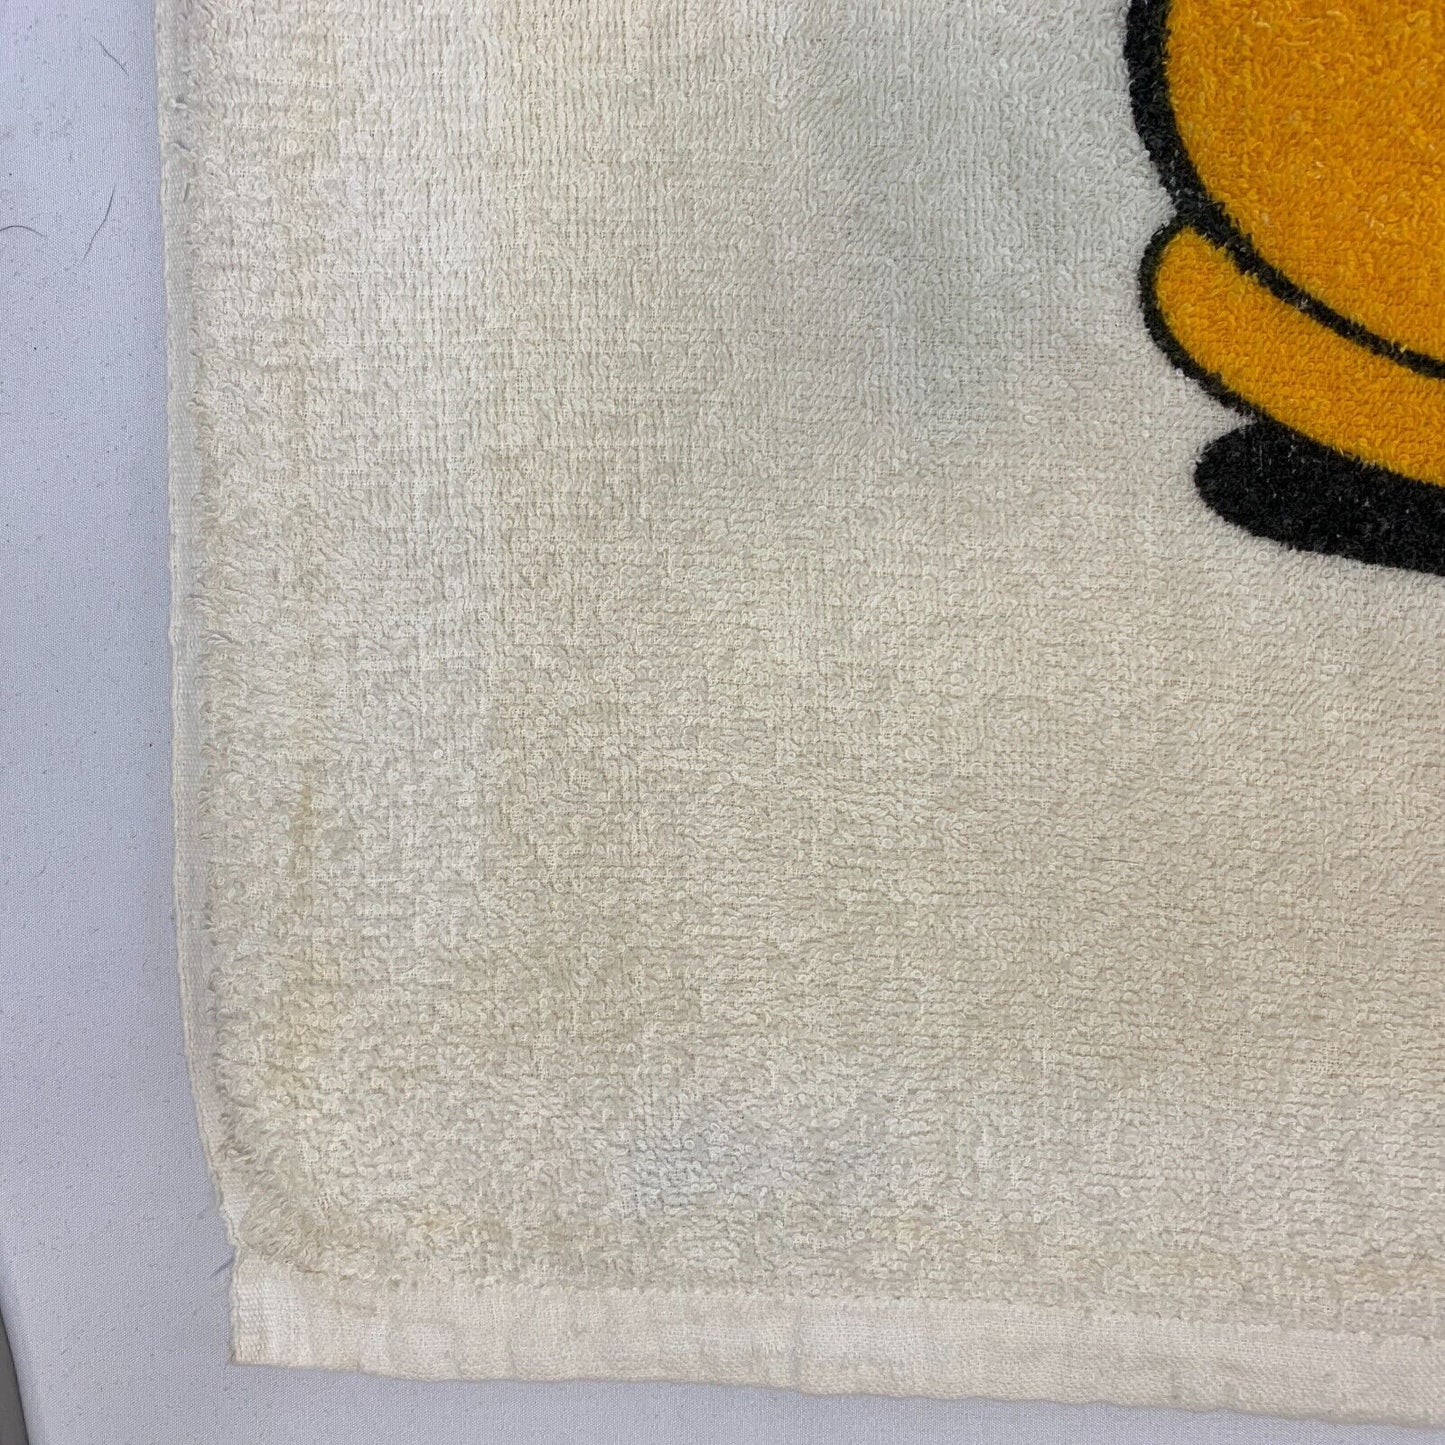 Walt Disney Mickey Mouse Beach Towel Vintage 80s 90s Disneyland Franco